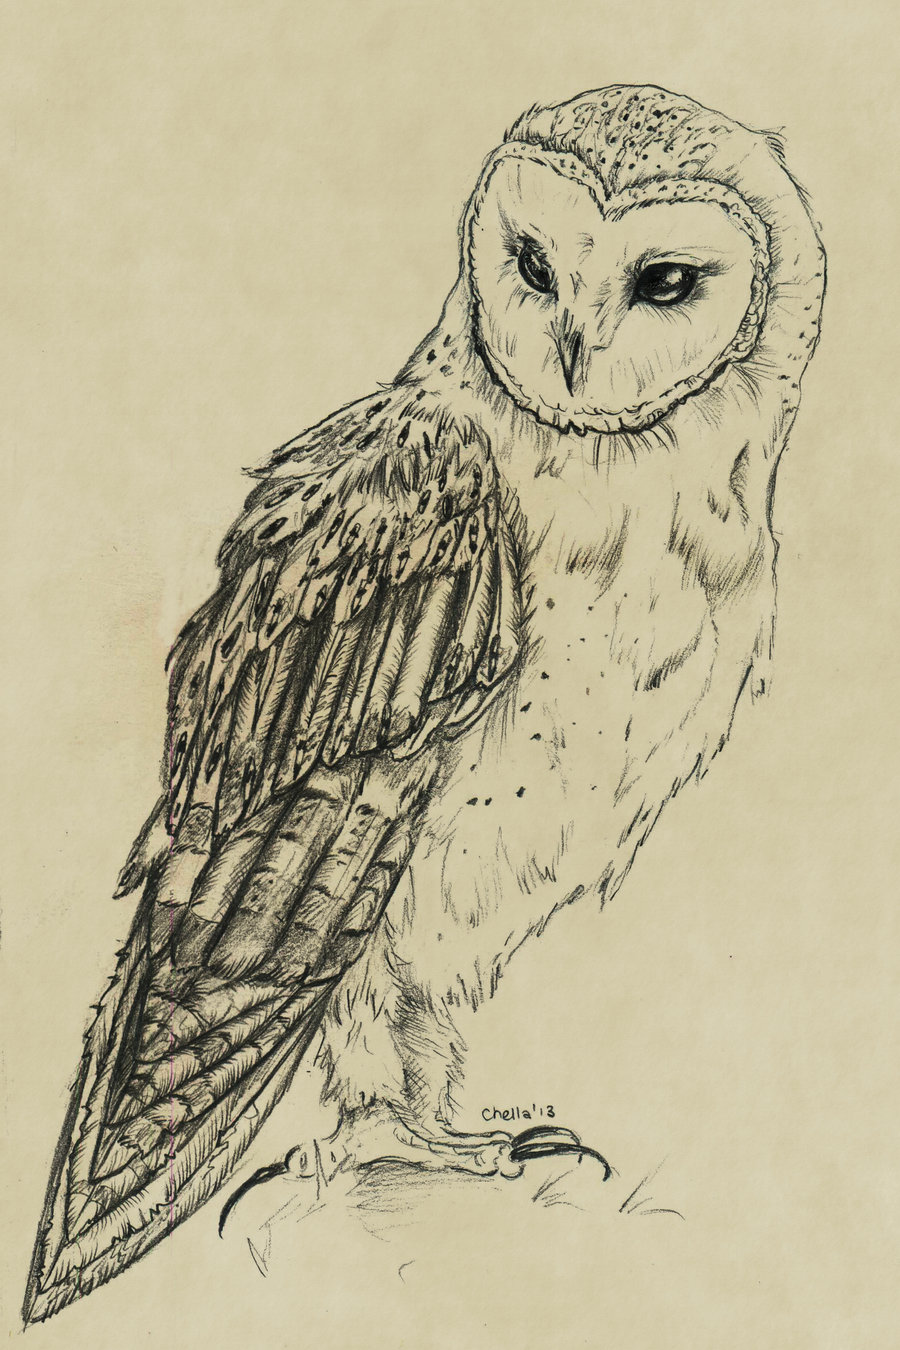 How to Draw a Realistic Owl | SketchBookNation.com